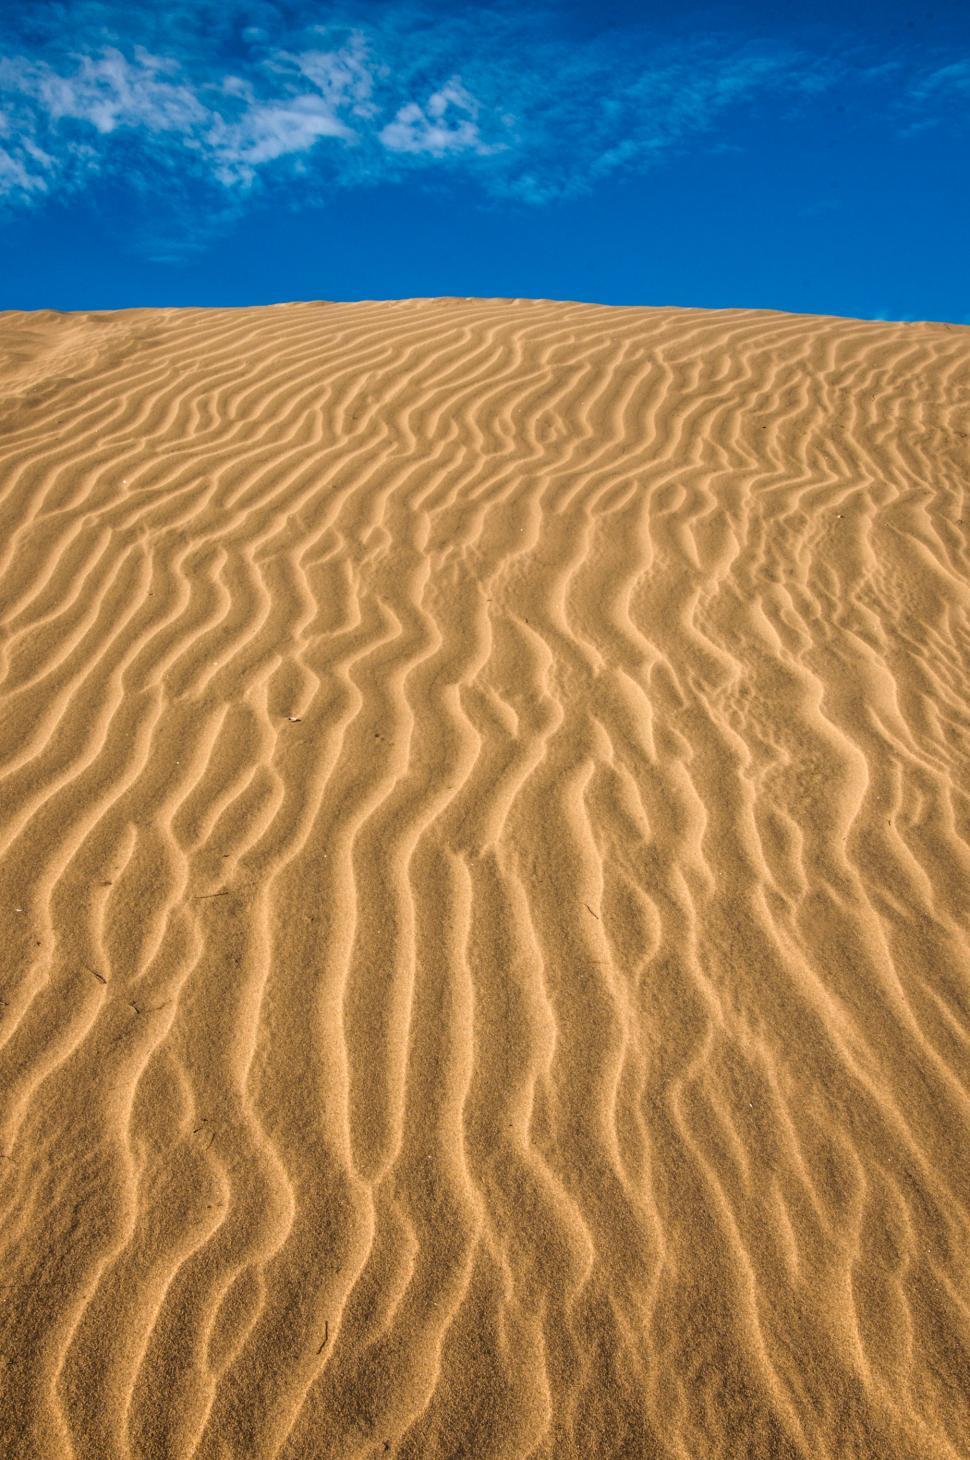 Free Image of Sand dunes 